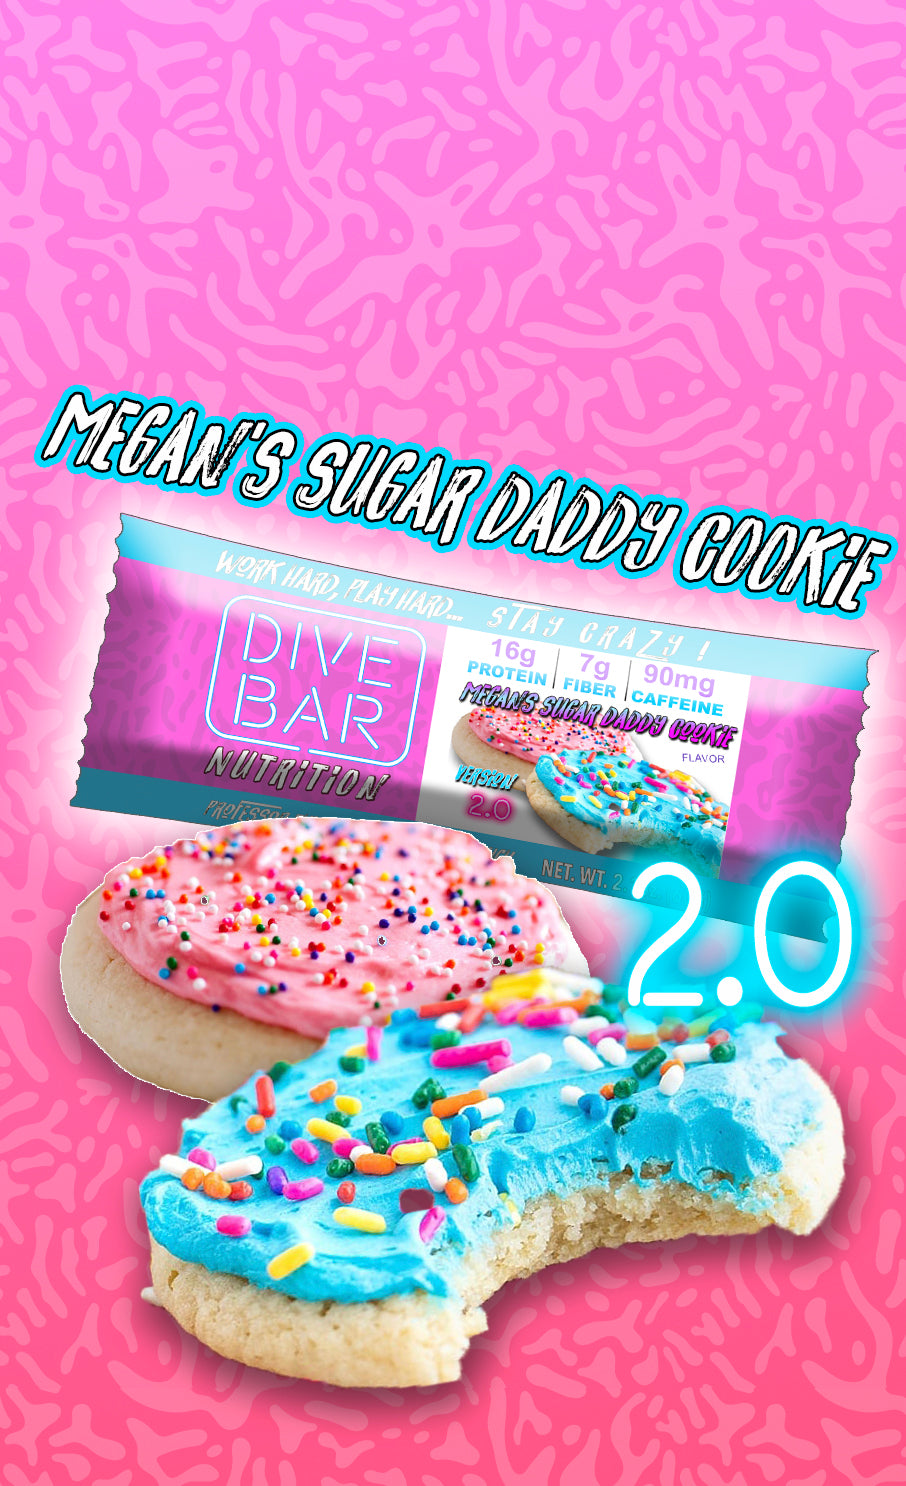 *FRESH BAKE* Sugar Daddy Cookie - 6 bars